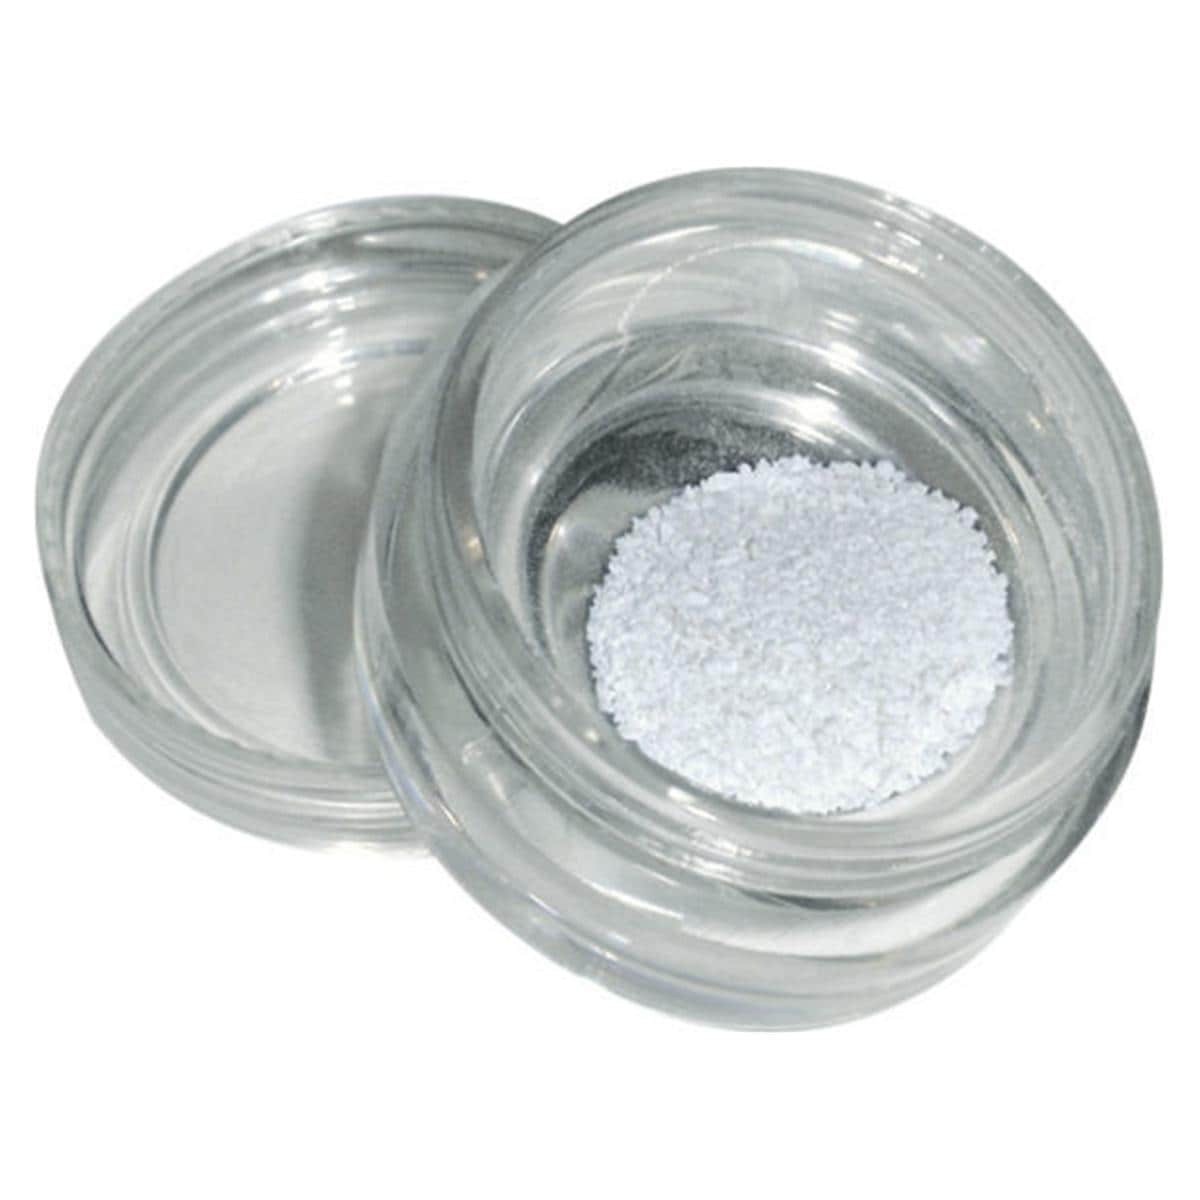 NuOss® Granulat - Spongiosagranulat (Cancellous), 0,25 - 1,0 mm, Packung 0,25 g